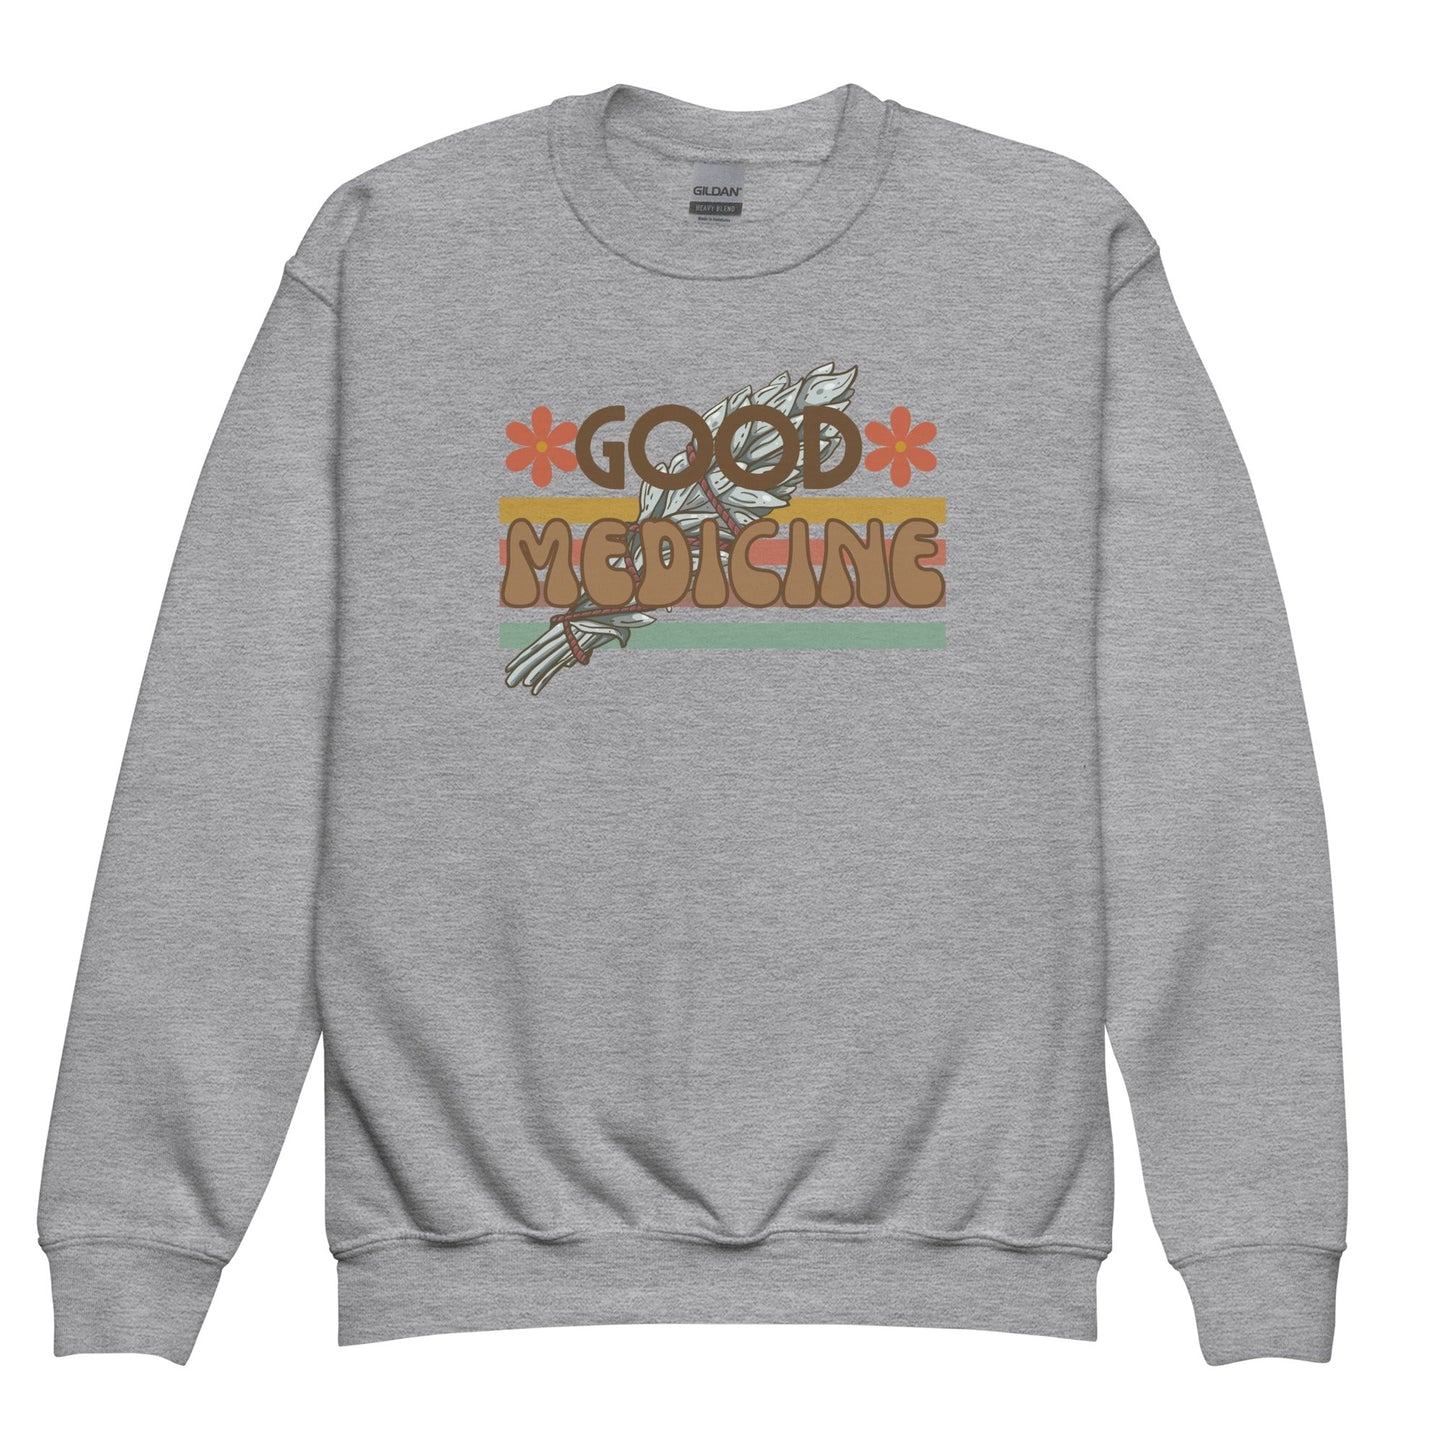 Good medicine Youth crewneck sweatshirt - Nikikw Designs